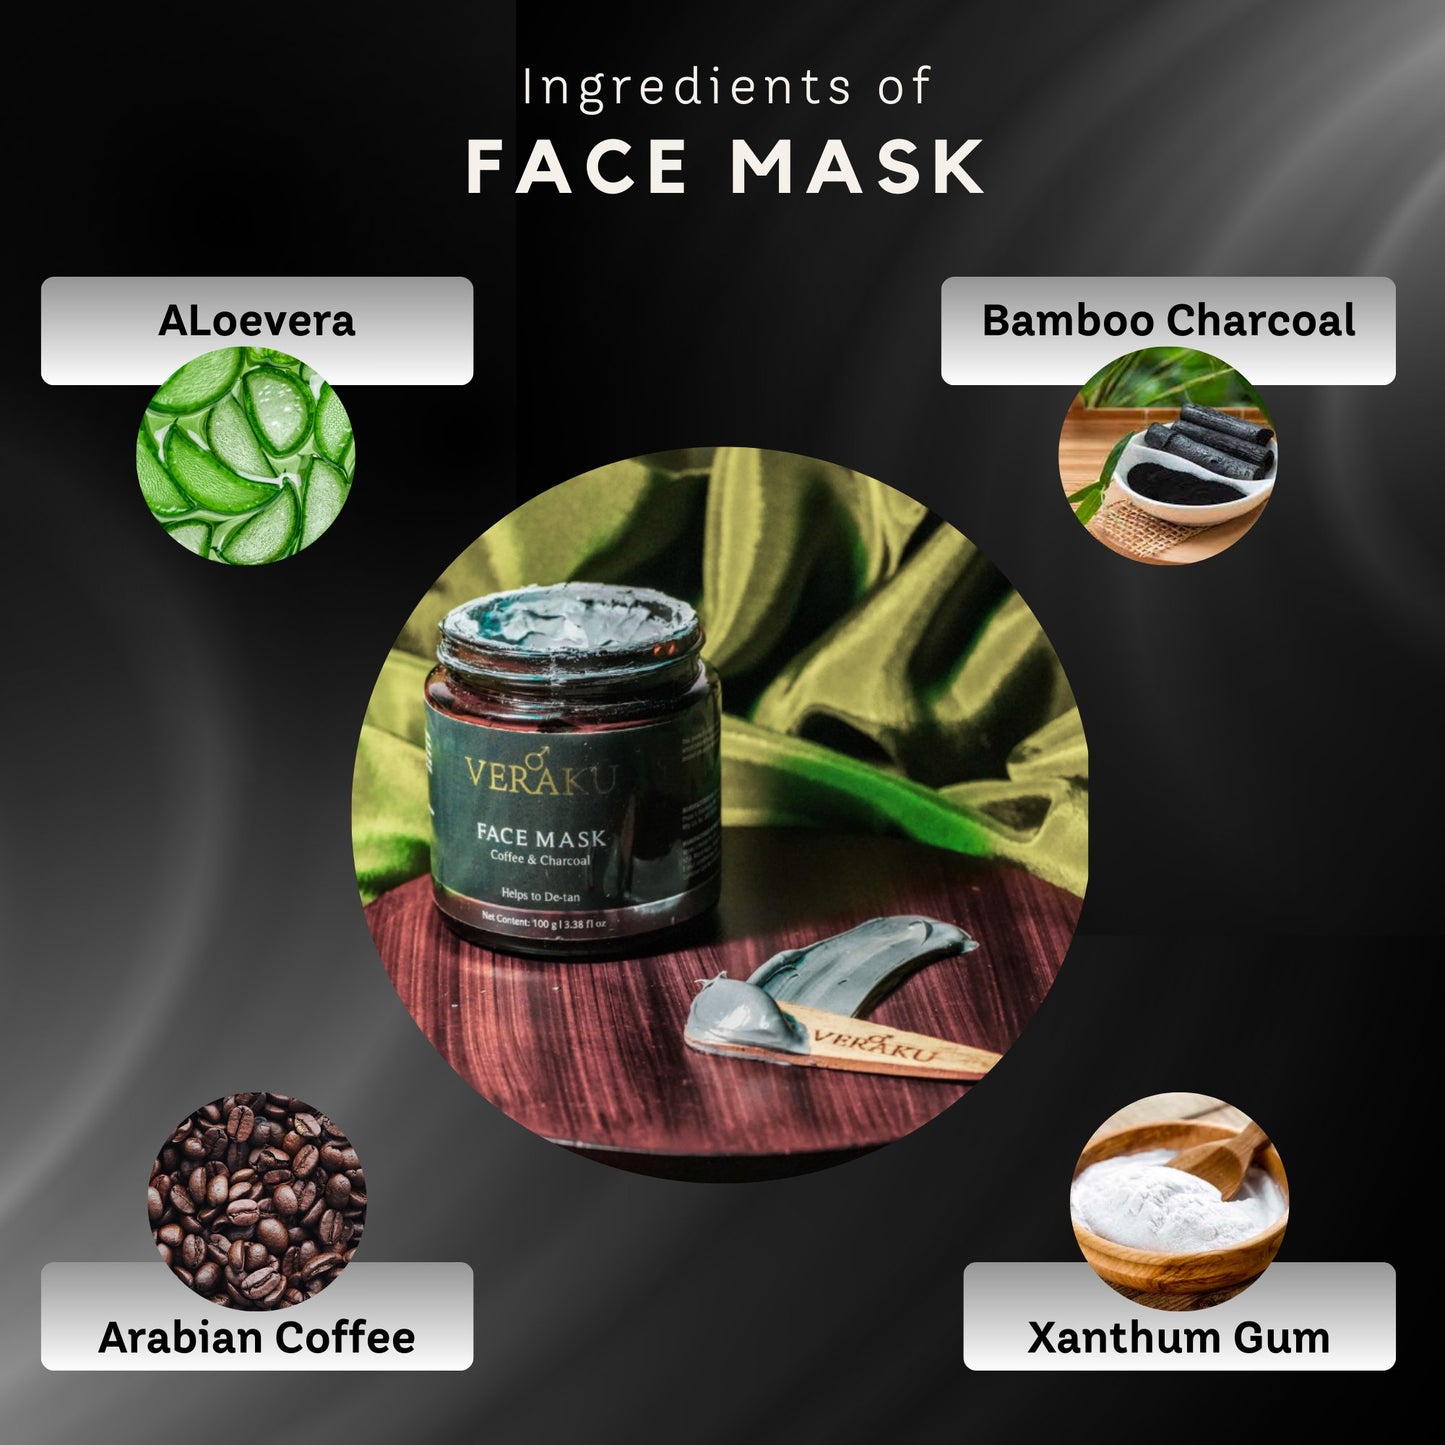 De-tan Kit For Men (Face Scrub & Face Mask) - Veraku